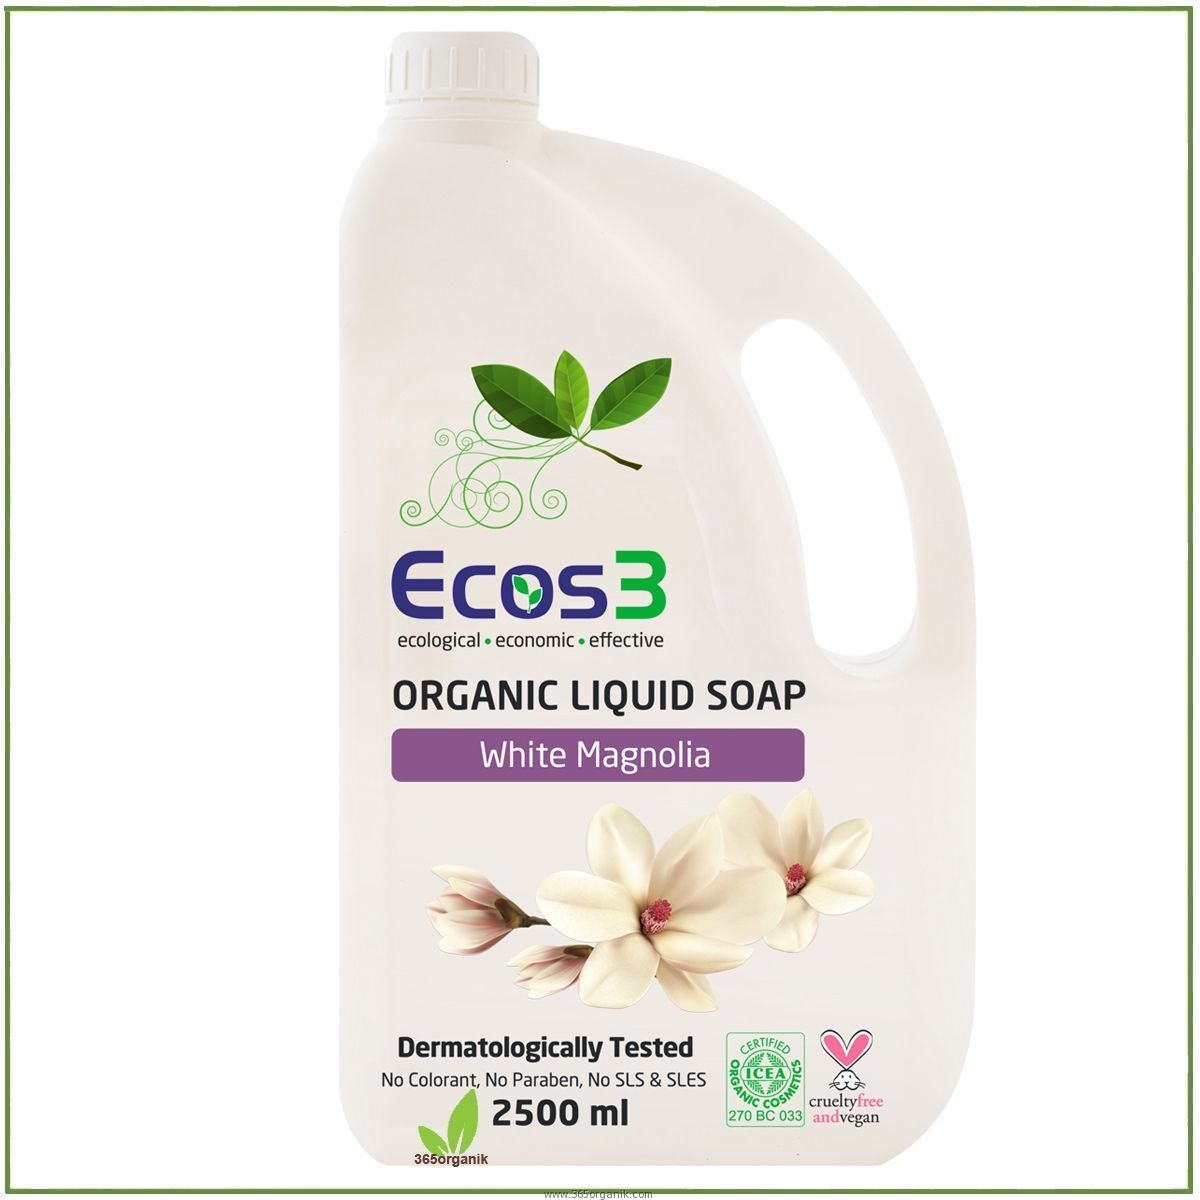 ECOS3 Organik Sıvı Sabun Beyaz Manolya 2500 ml | ECOS3 | Organik Sabun ve Organik Duş Jeli | 